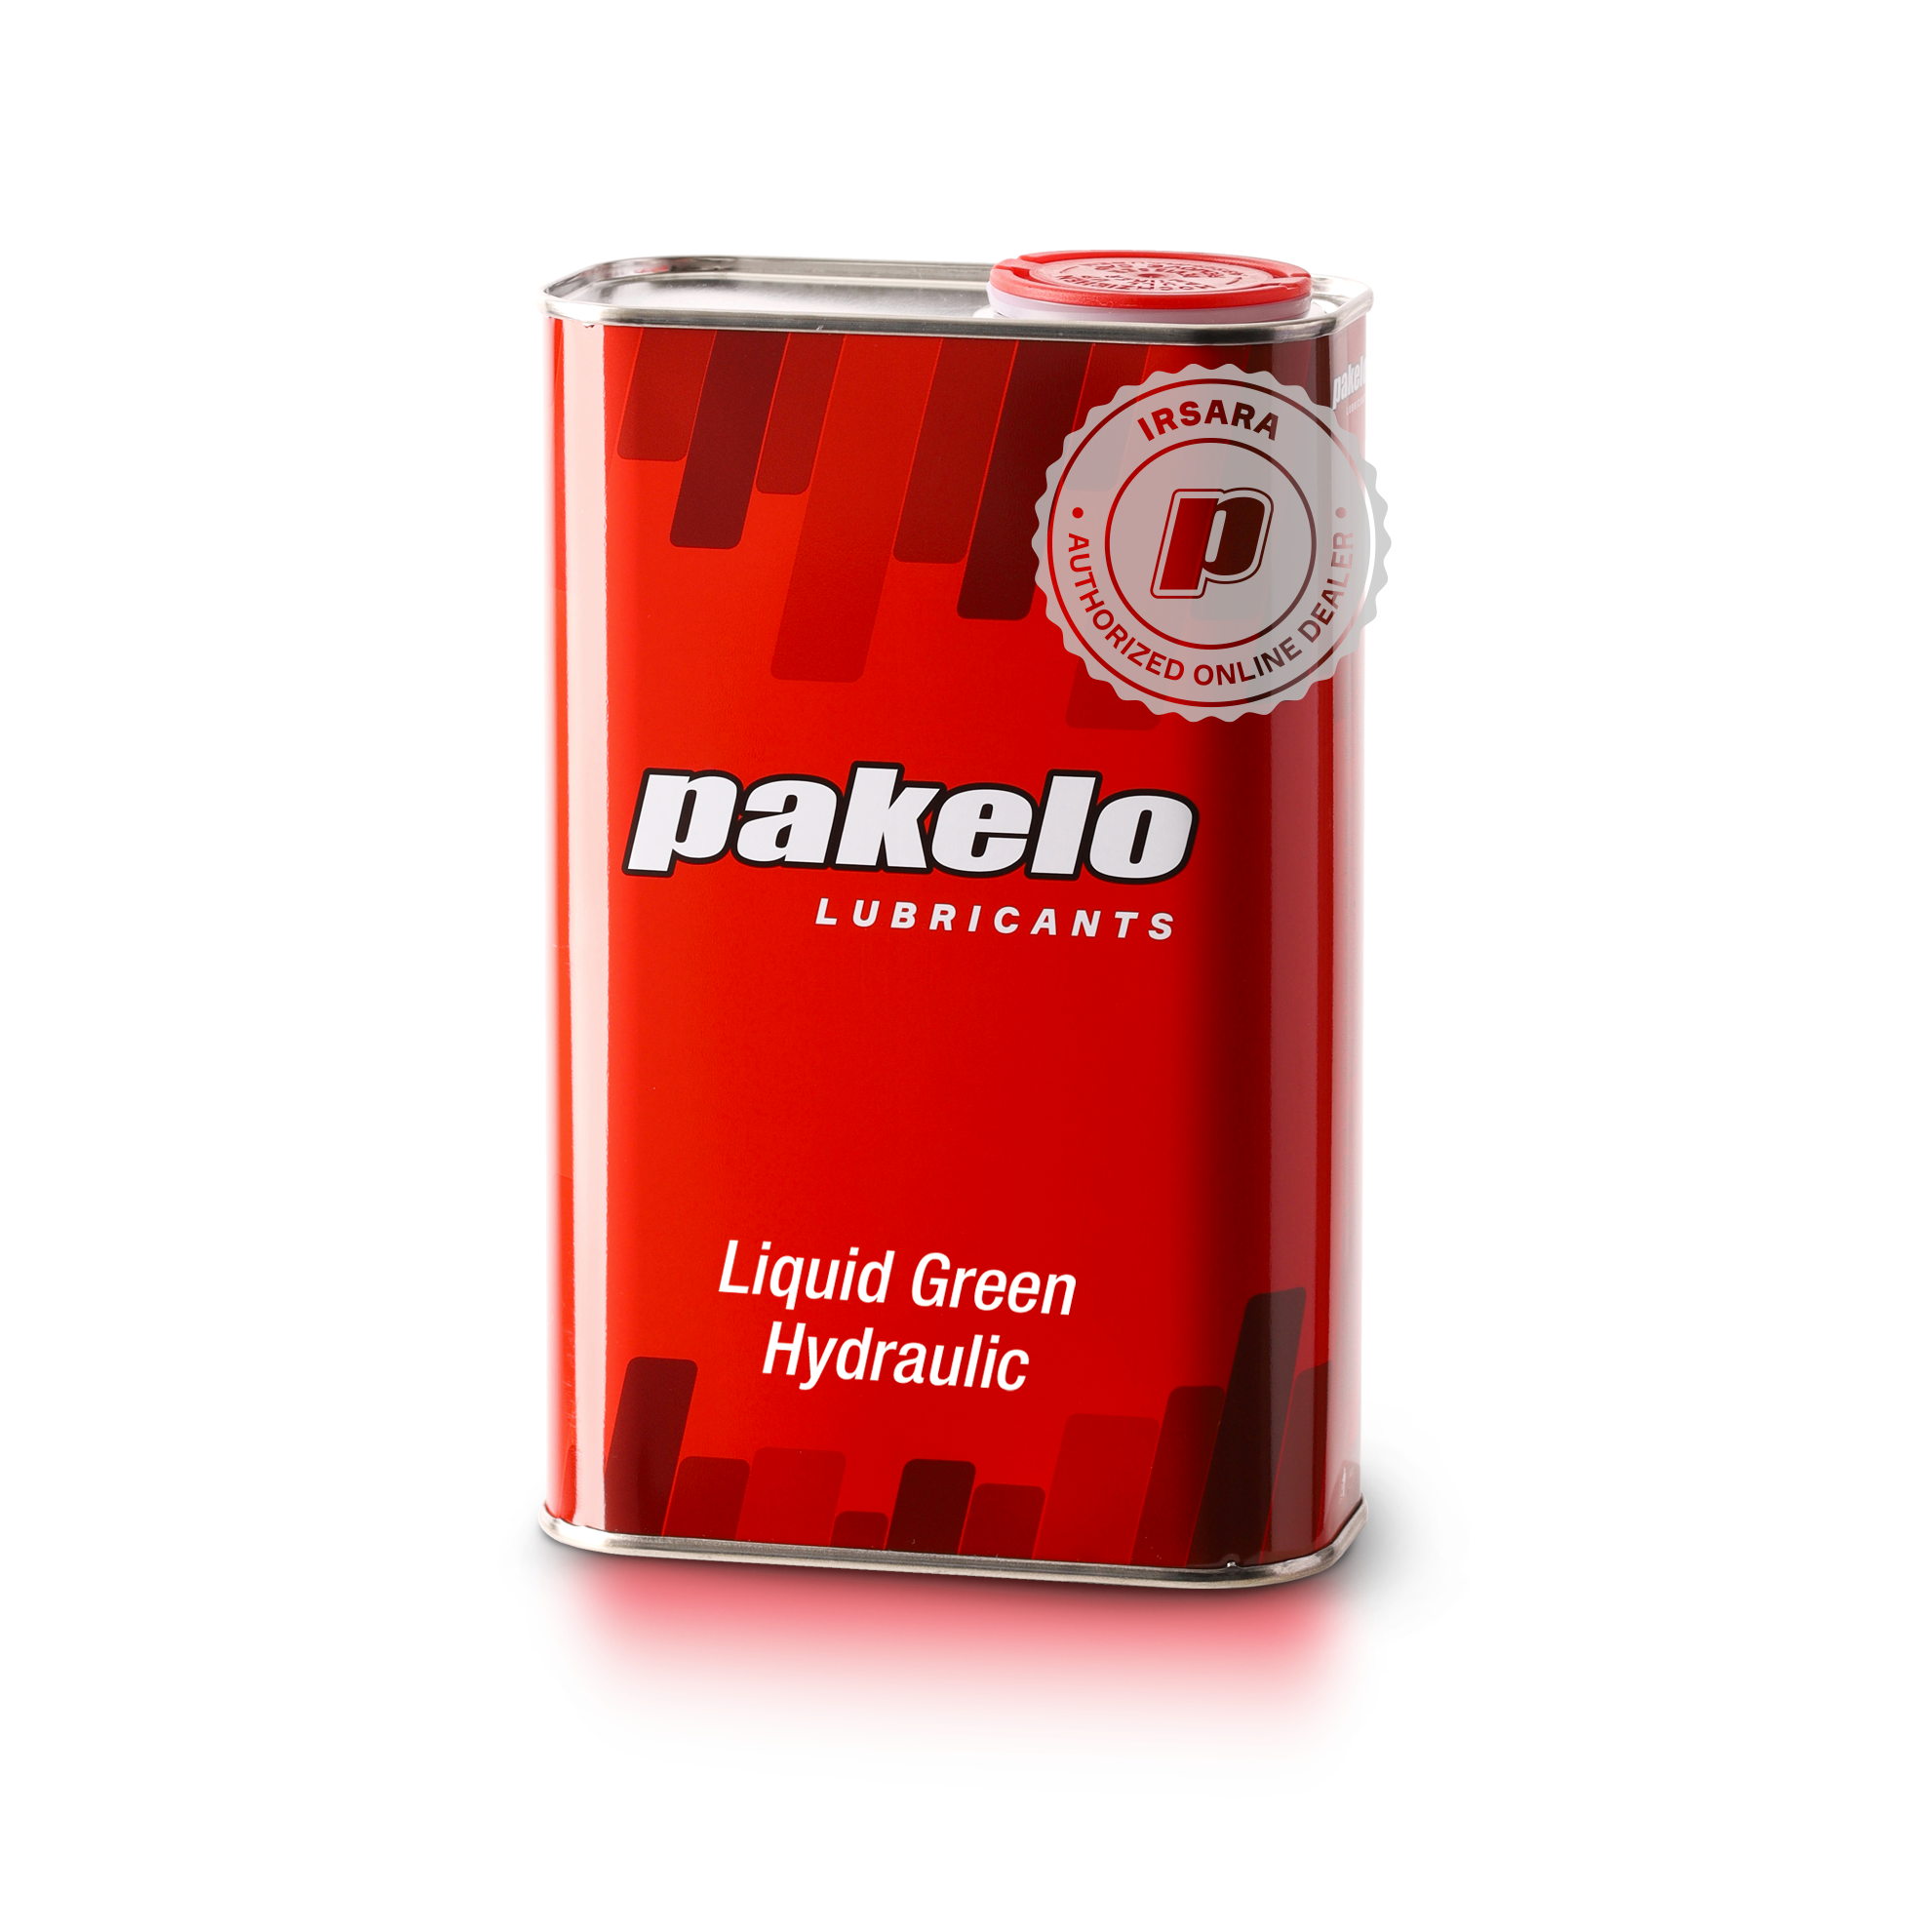 Pakelo Green Hydraulic (1L)